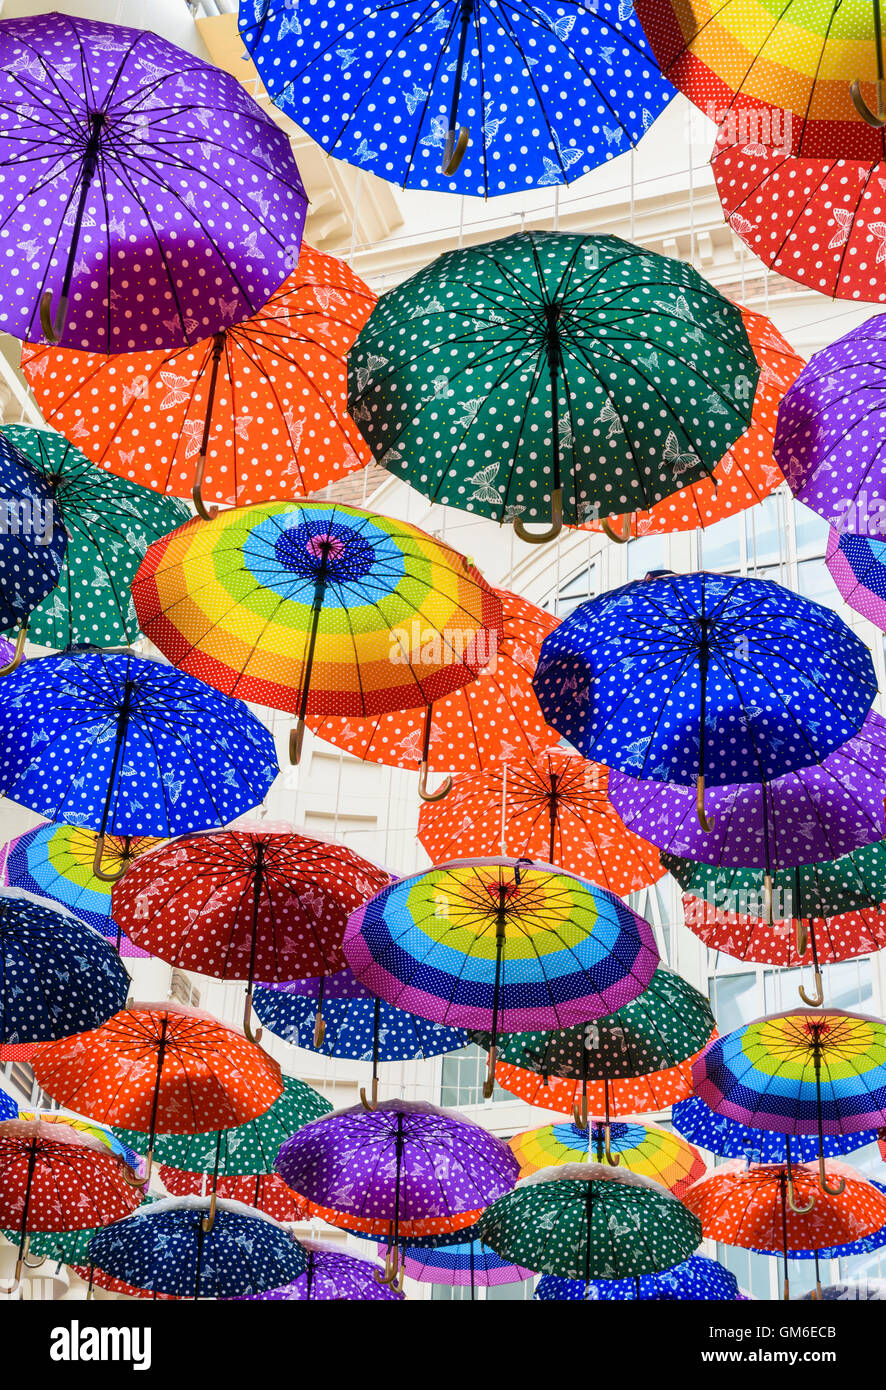 Detail of floating umbrellas art installation at the Dubai Mall, Dubai, UAE  Stock Photo - Alamy